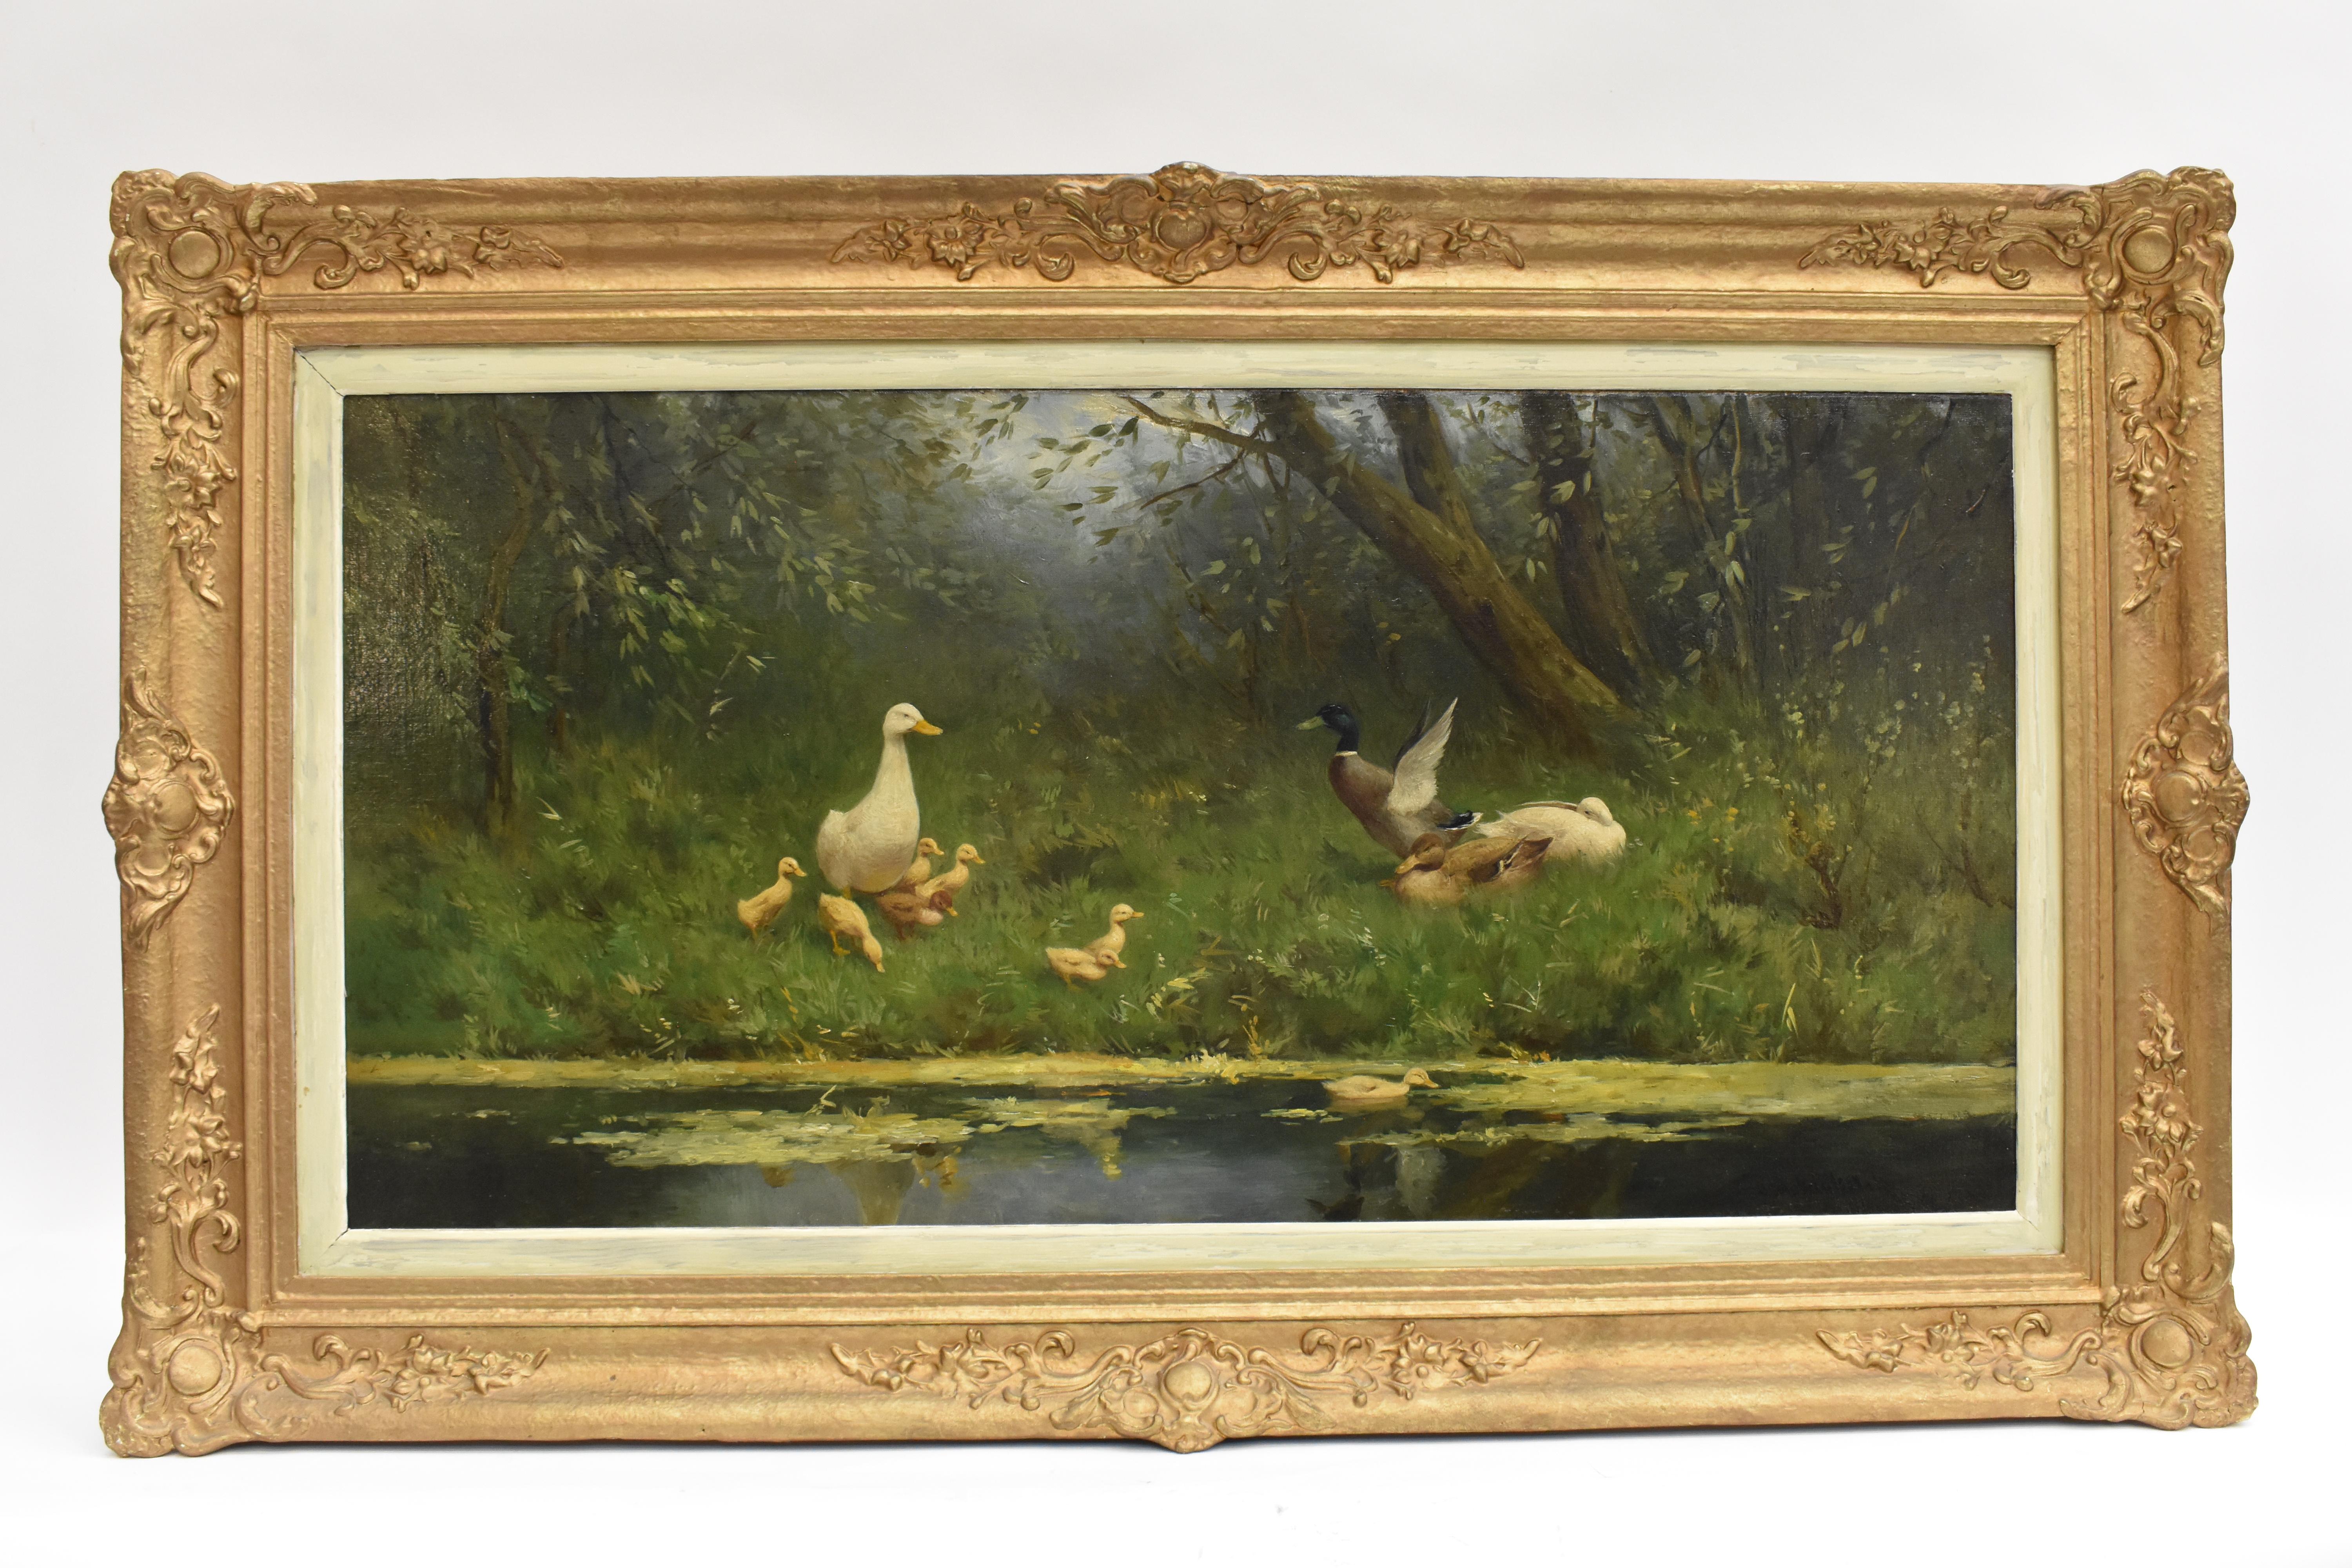 Artz, David Adolph Constant Animal Painting - Ducks At The Waterfront Dutch David Constant Artz Impressionist realist. 